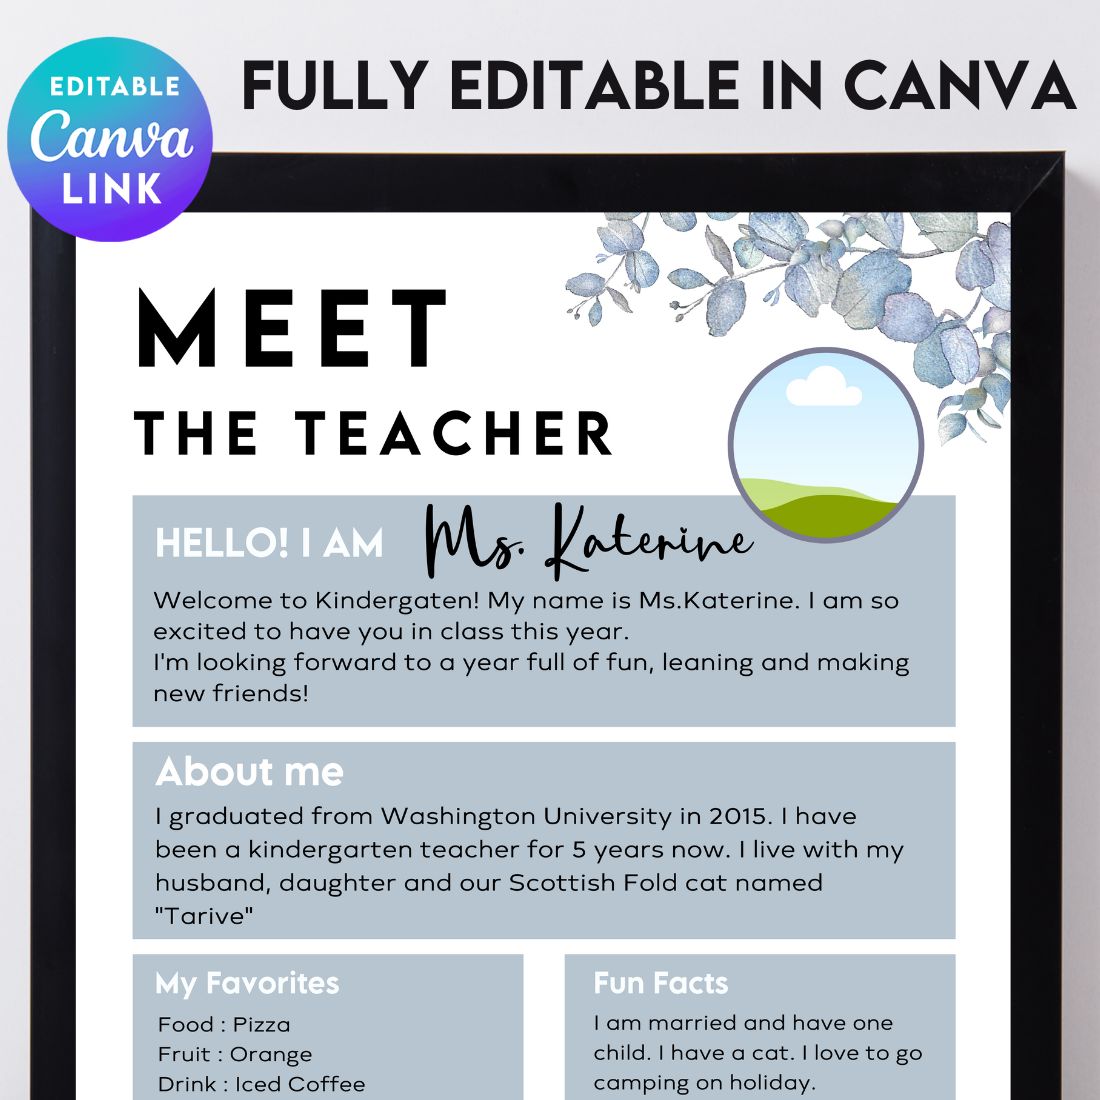 Meet the Teacher#1 - Canva Template preview image.